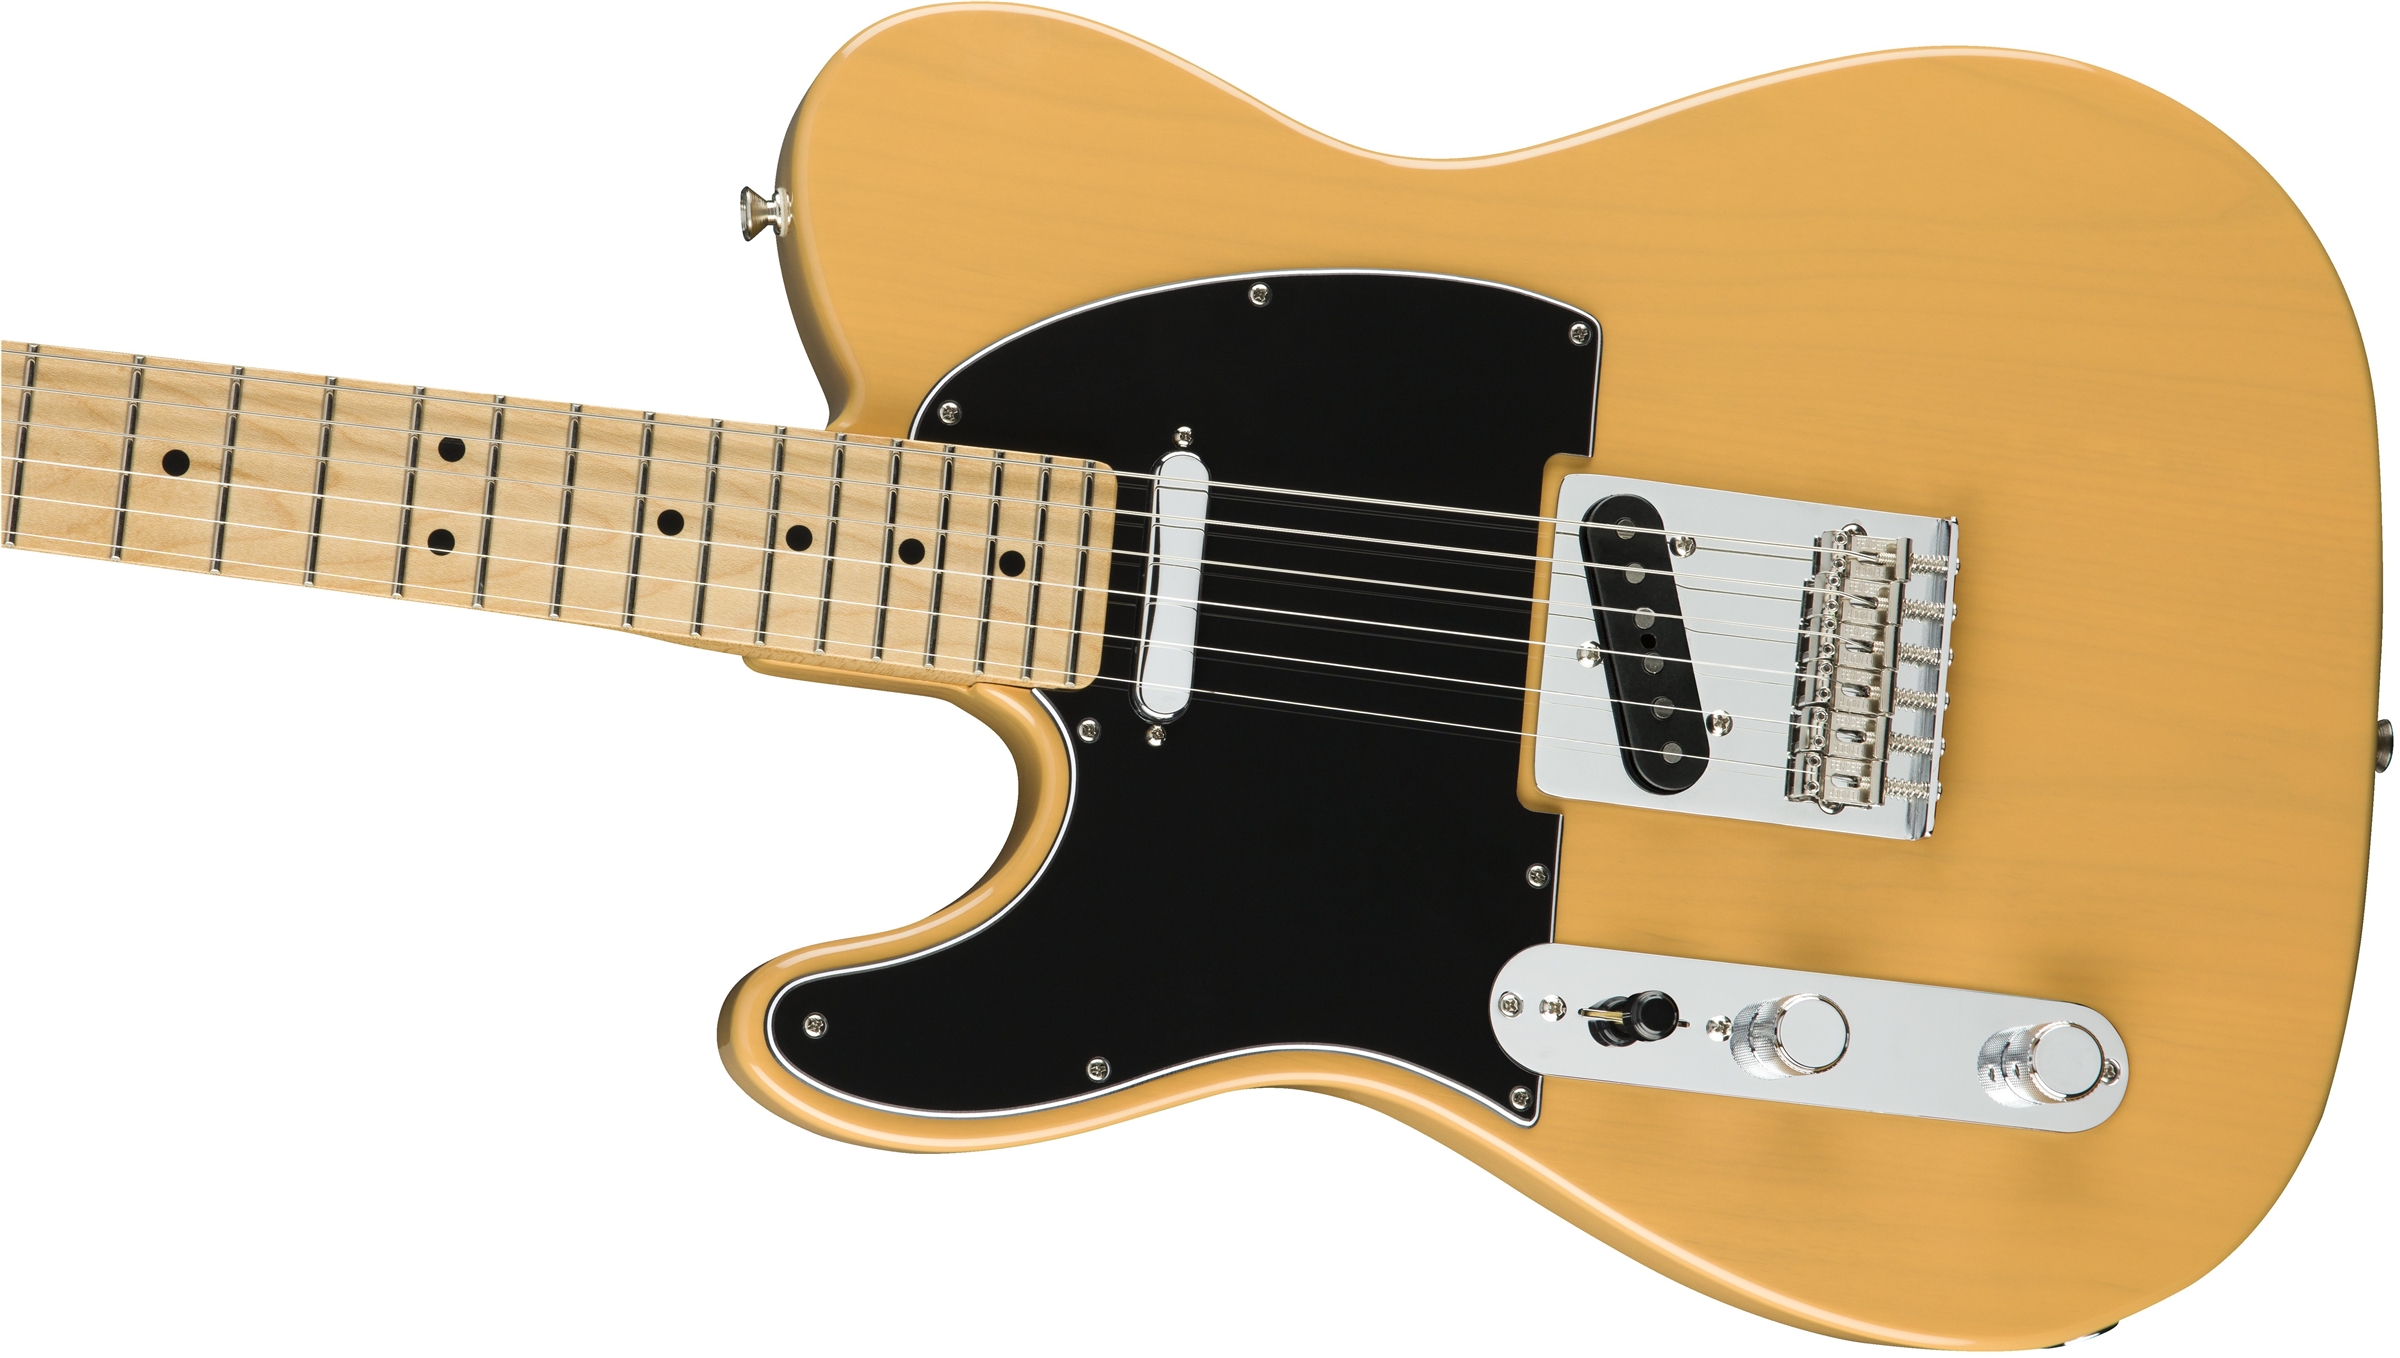 Fender Tele Player Lh Gaucher Mex 2s Mn - Butterscotch Blonde - Left-handed electric guitar - Variation 3